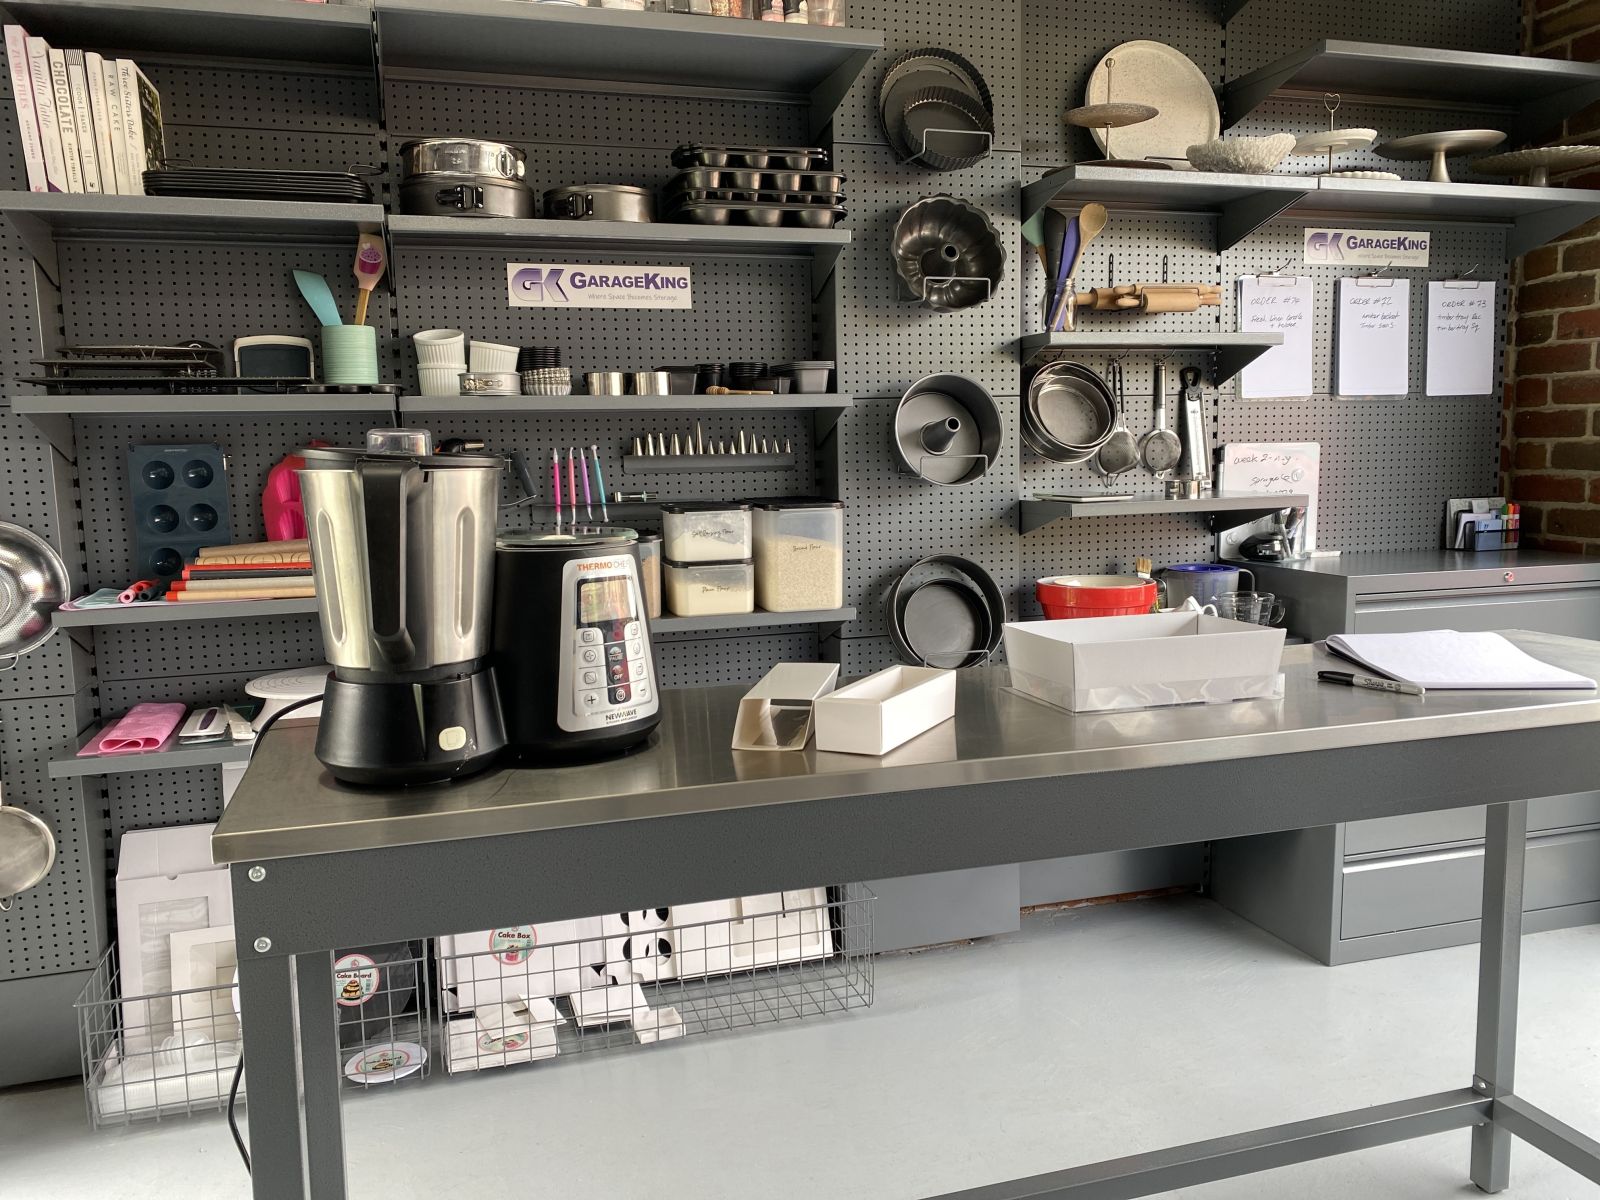 A garageking garage storage shelving system for a baking business